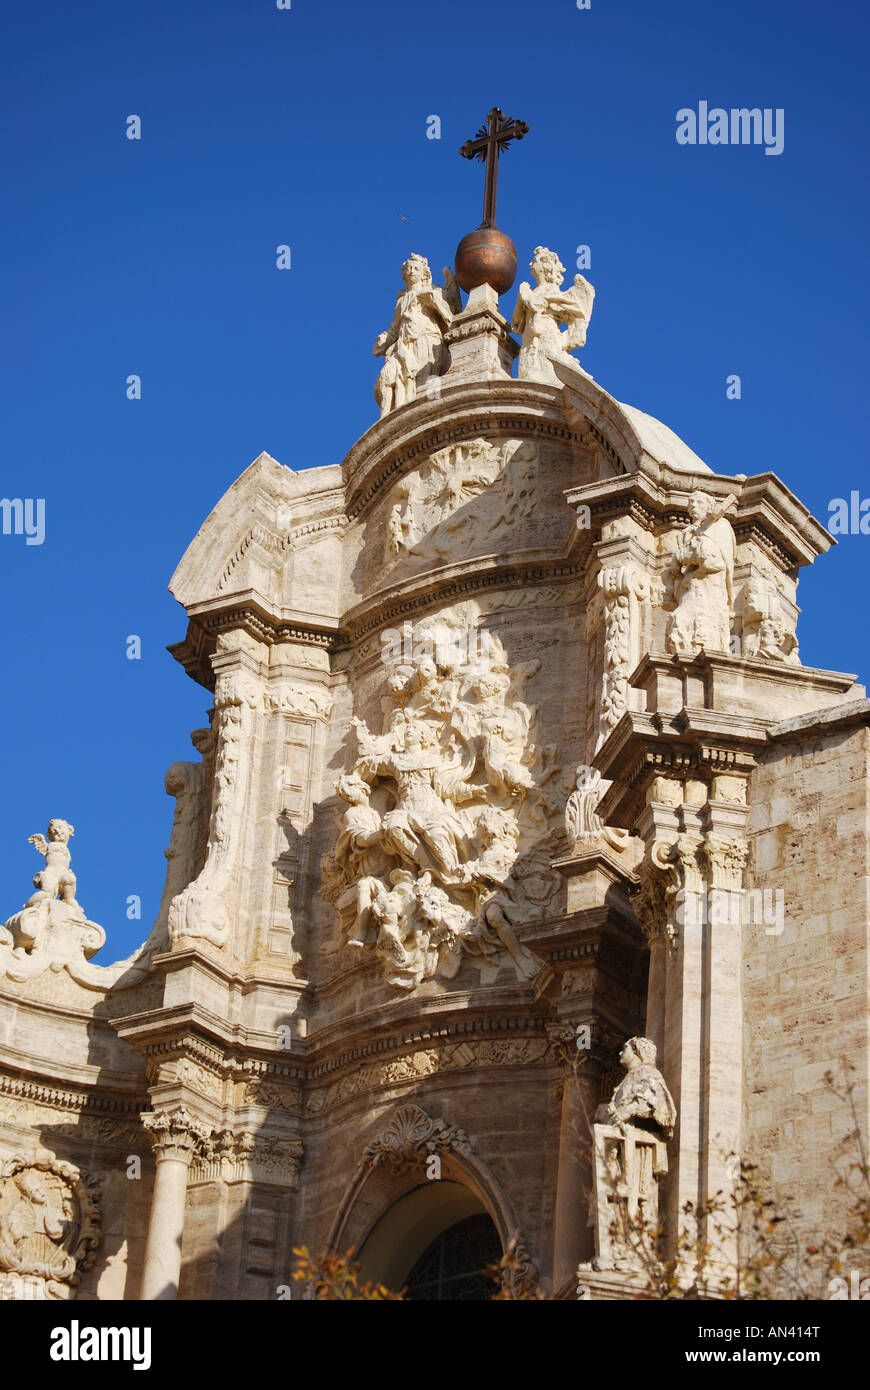 La façade de la cathédrale, la Plaza de la Reina, Valencia, Costa del Azahar, Valencia Province, Espagne Banque D'Images